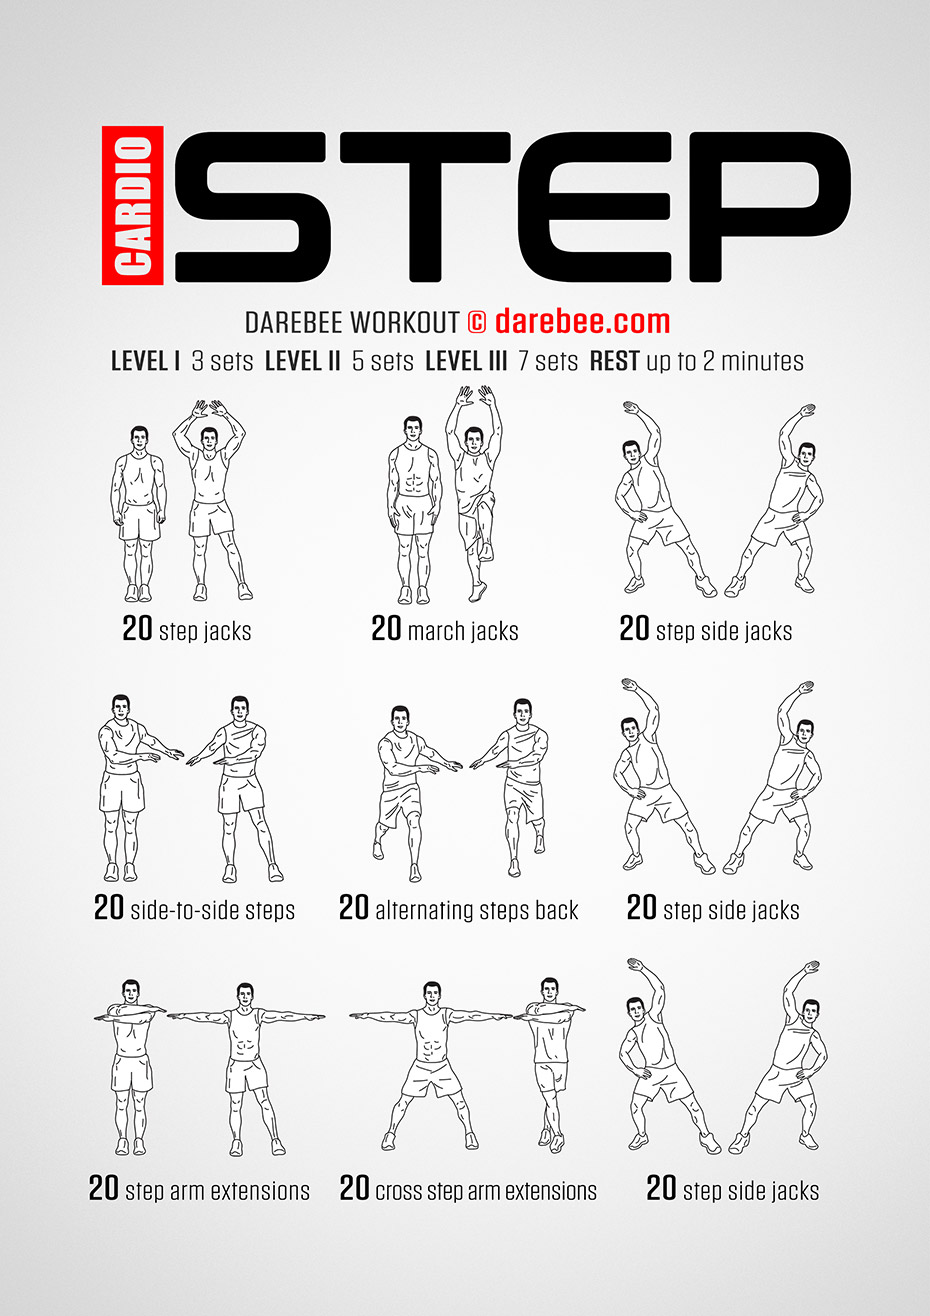 Cardio Step Workout